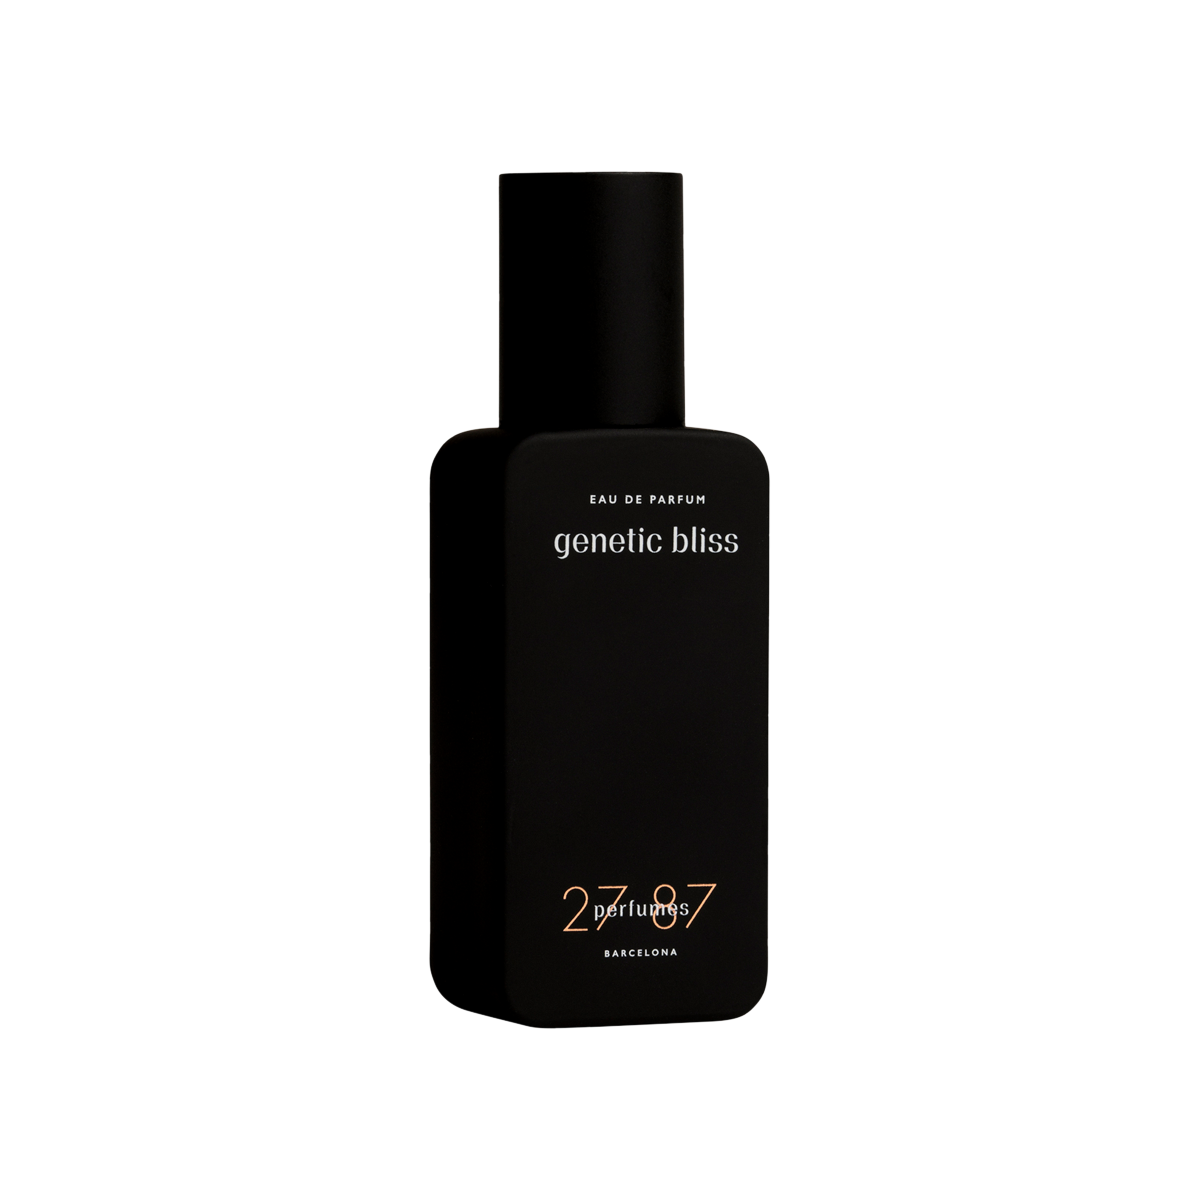 27 87 Perfumes - Genetic Bliss Eau de Parfum